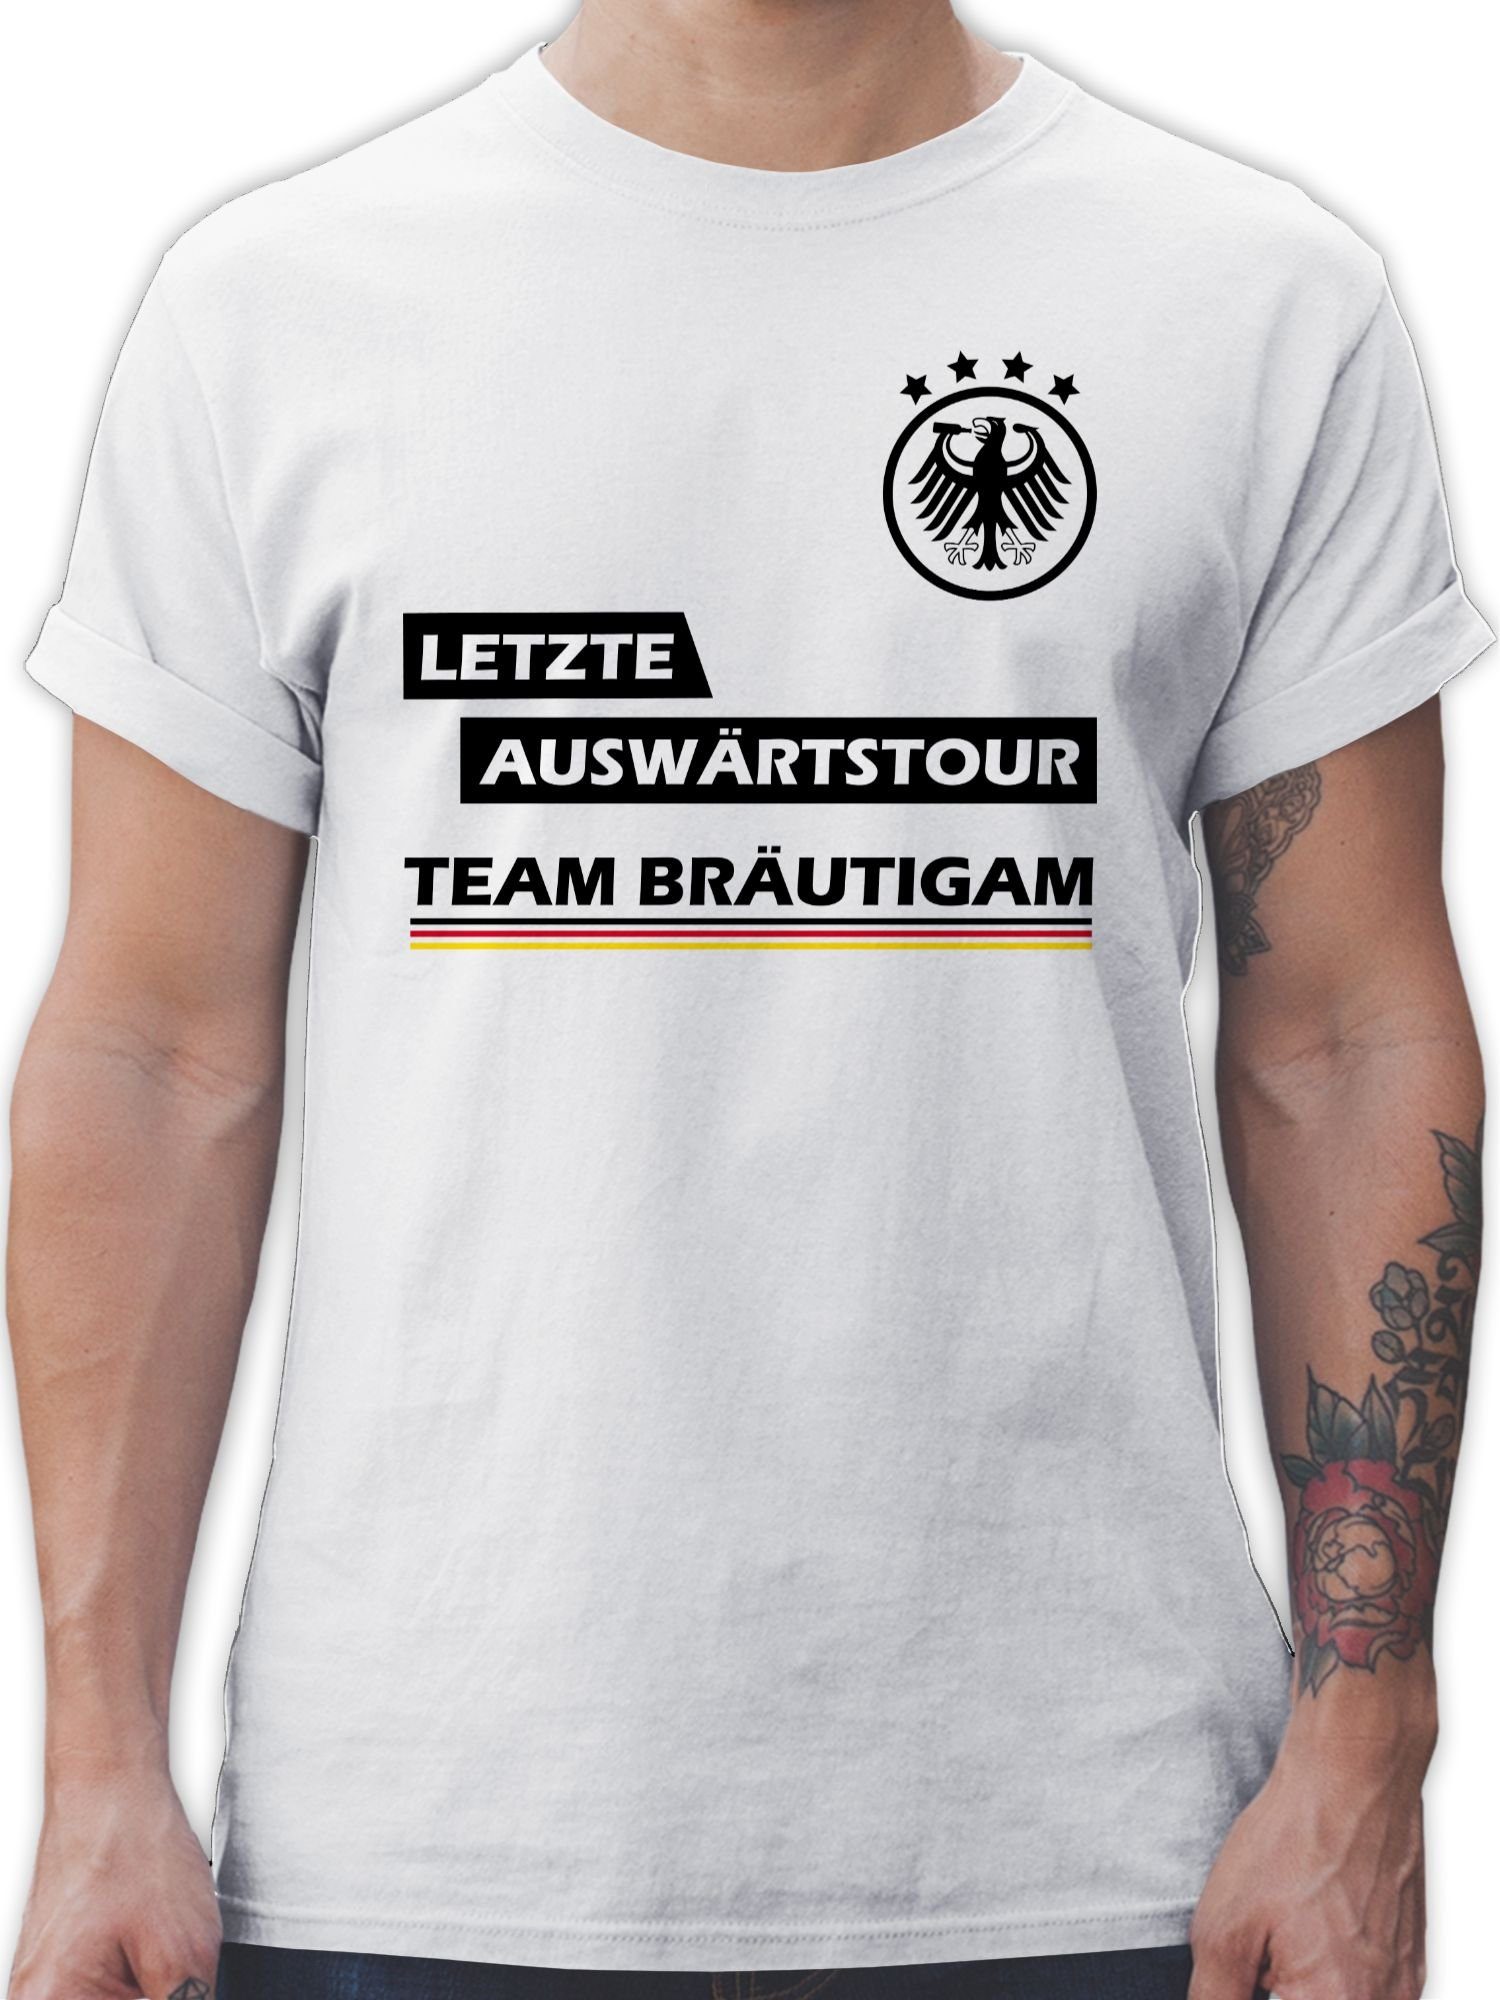 Auswärtstour 1 Männer Weiß Bräutigam Shirtracer T-Shirt Letzte JGA Team